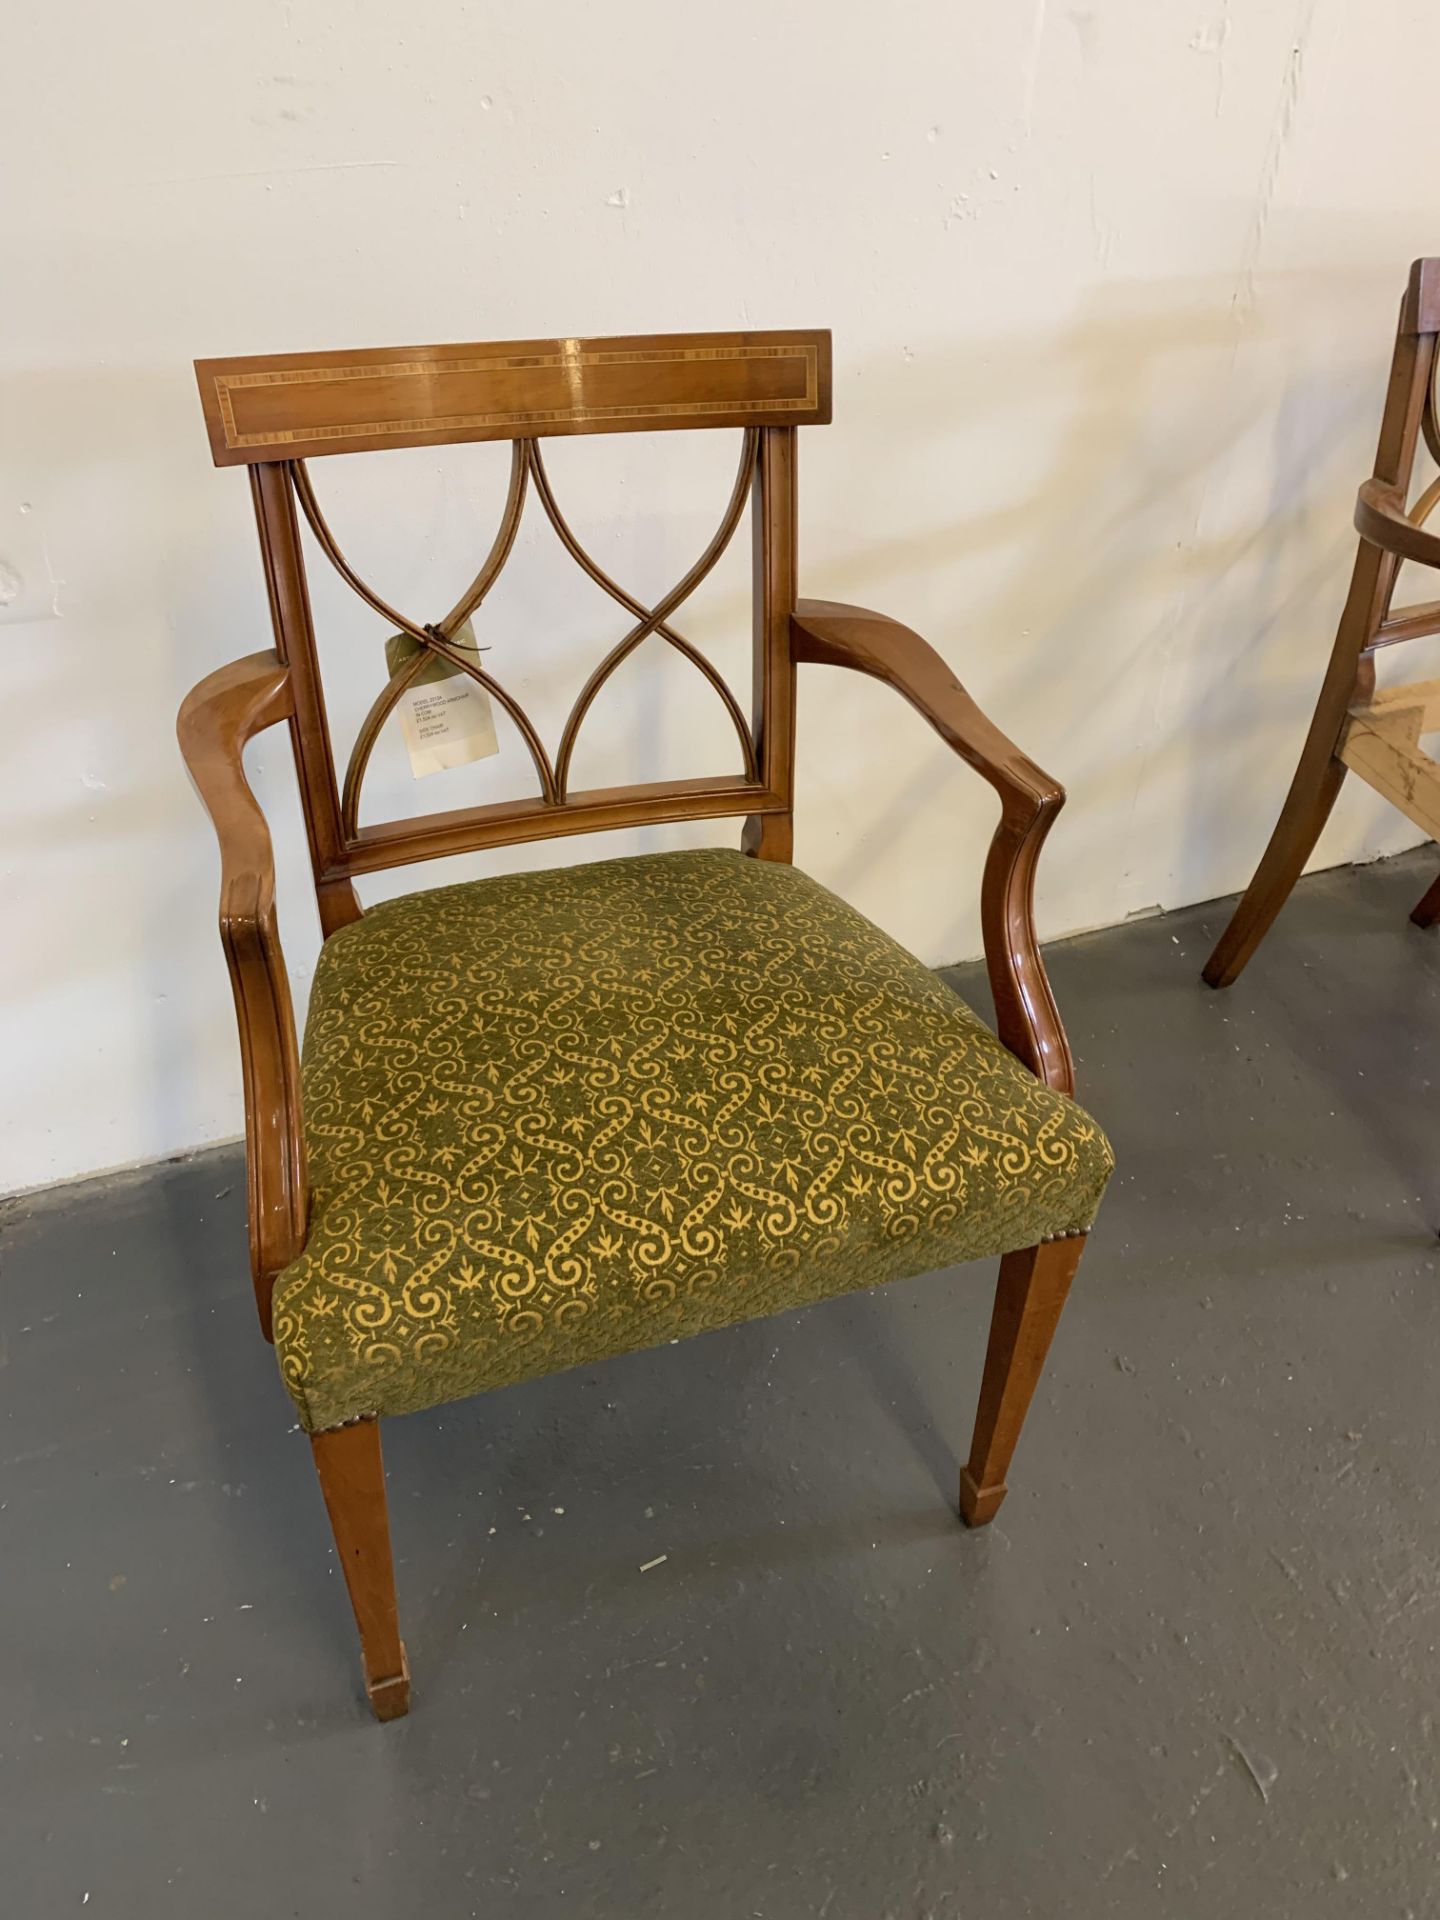 Arthur Brett Fruitwood Arm Chair - Image 3 of 4